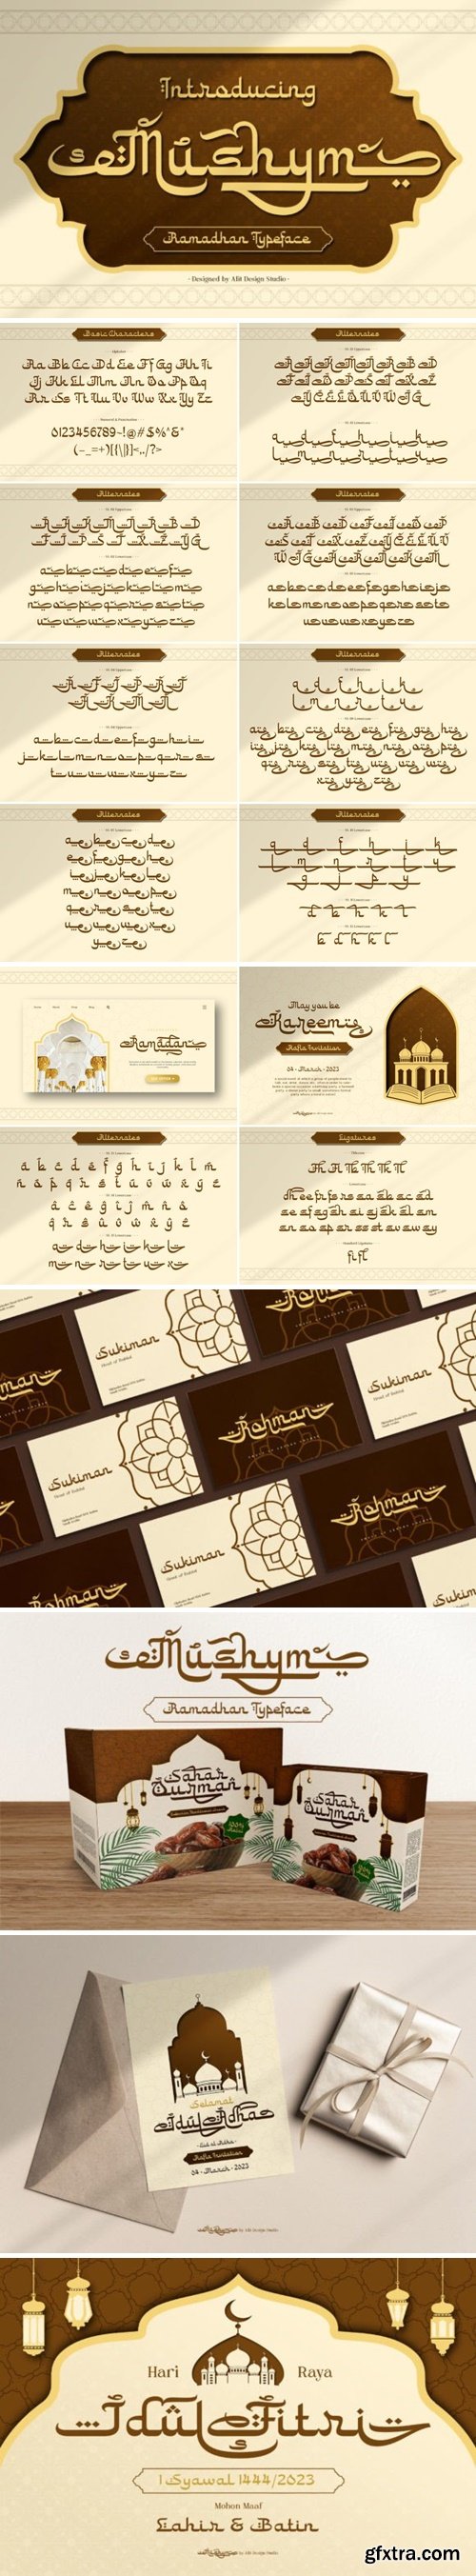 Mushym Arabic Typeface Font